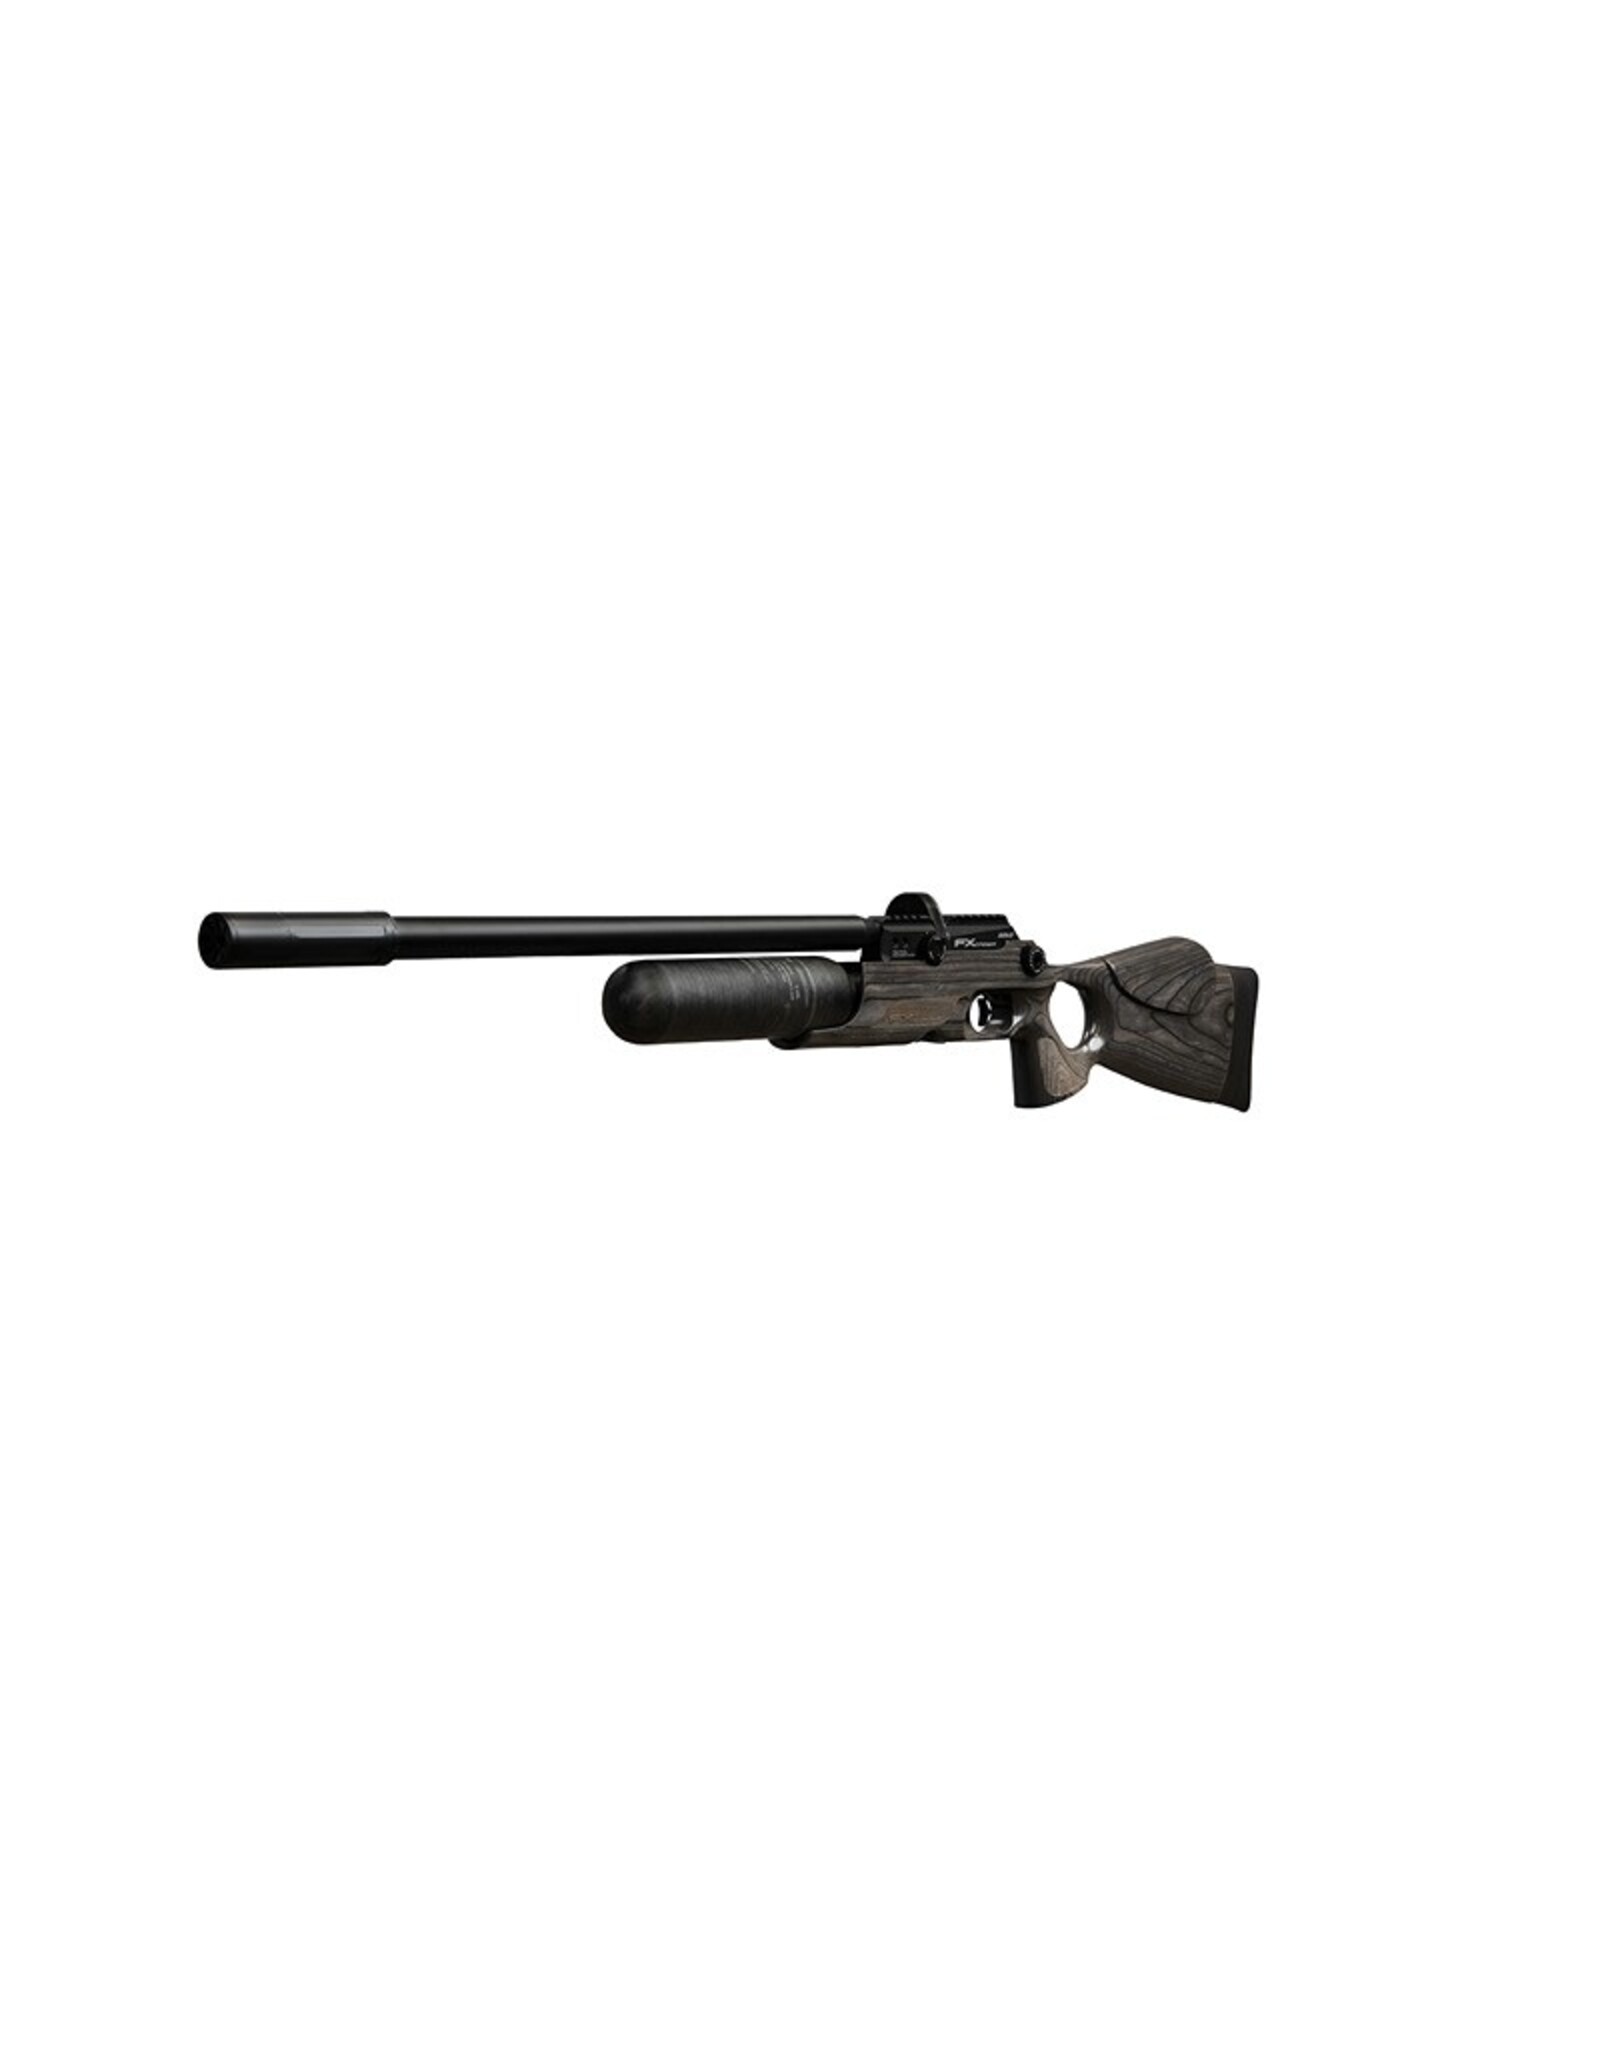 FX Airguns FX Crown MKII Standard, Black Pepper Laminate  - 0.25 caliber - w/ DONNYFL MOD